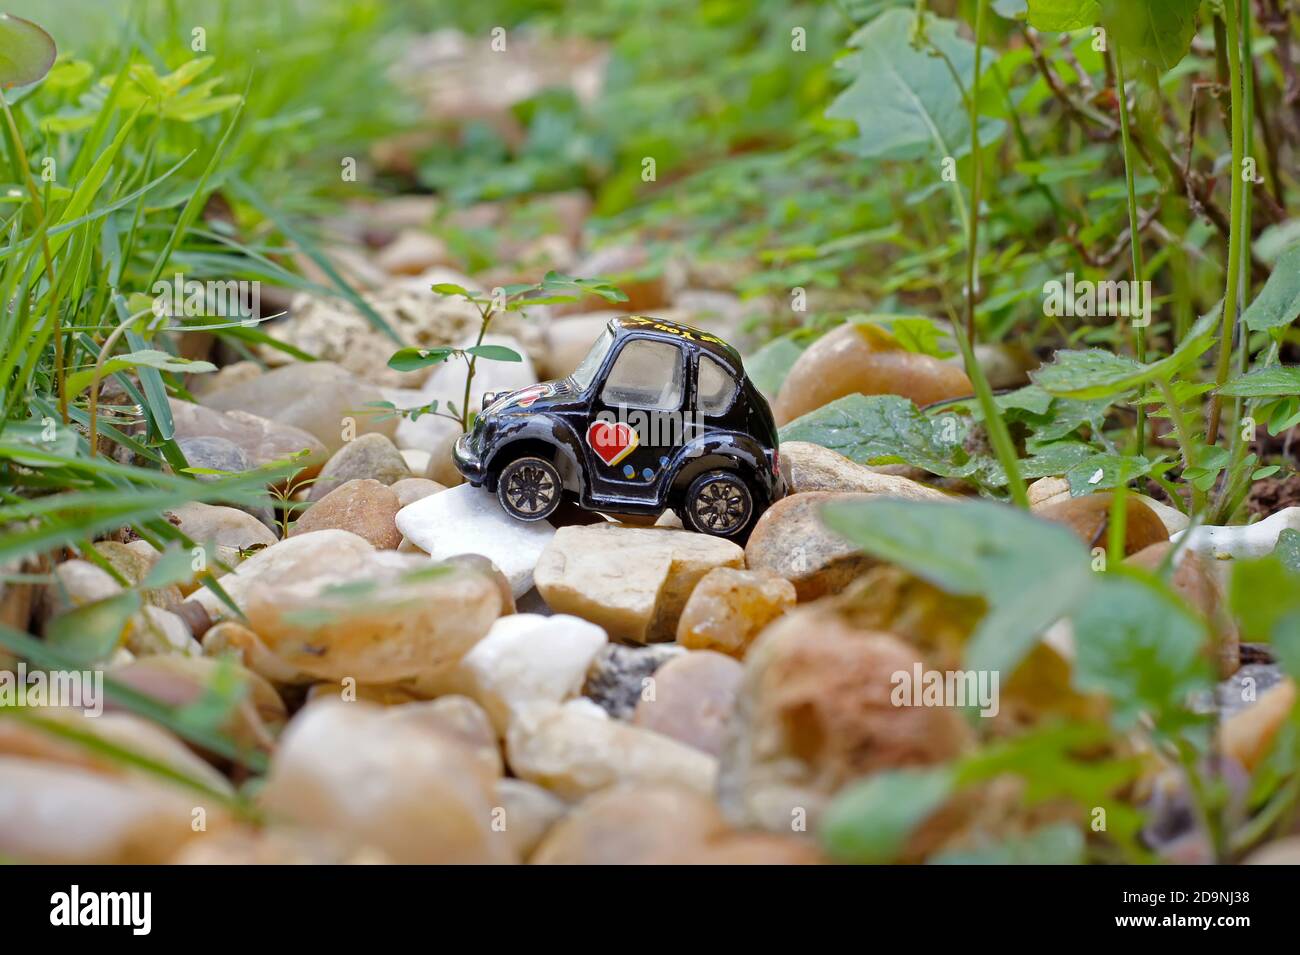 Toy volkswagen mini Beetle Stock Photo